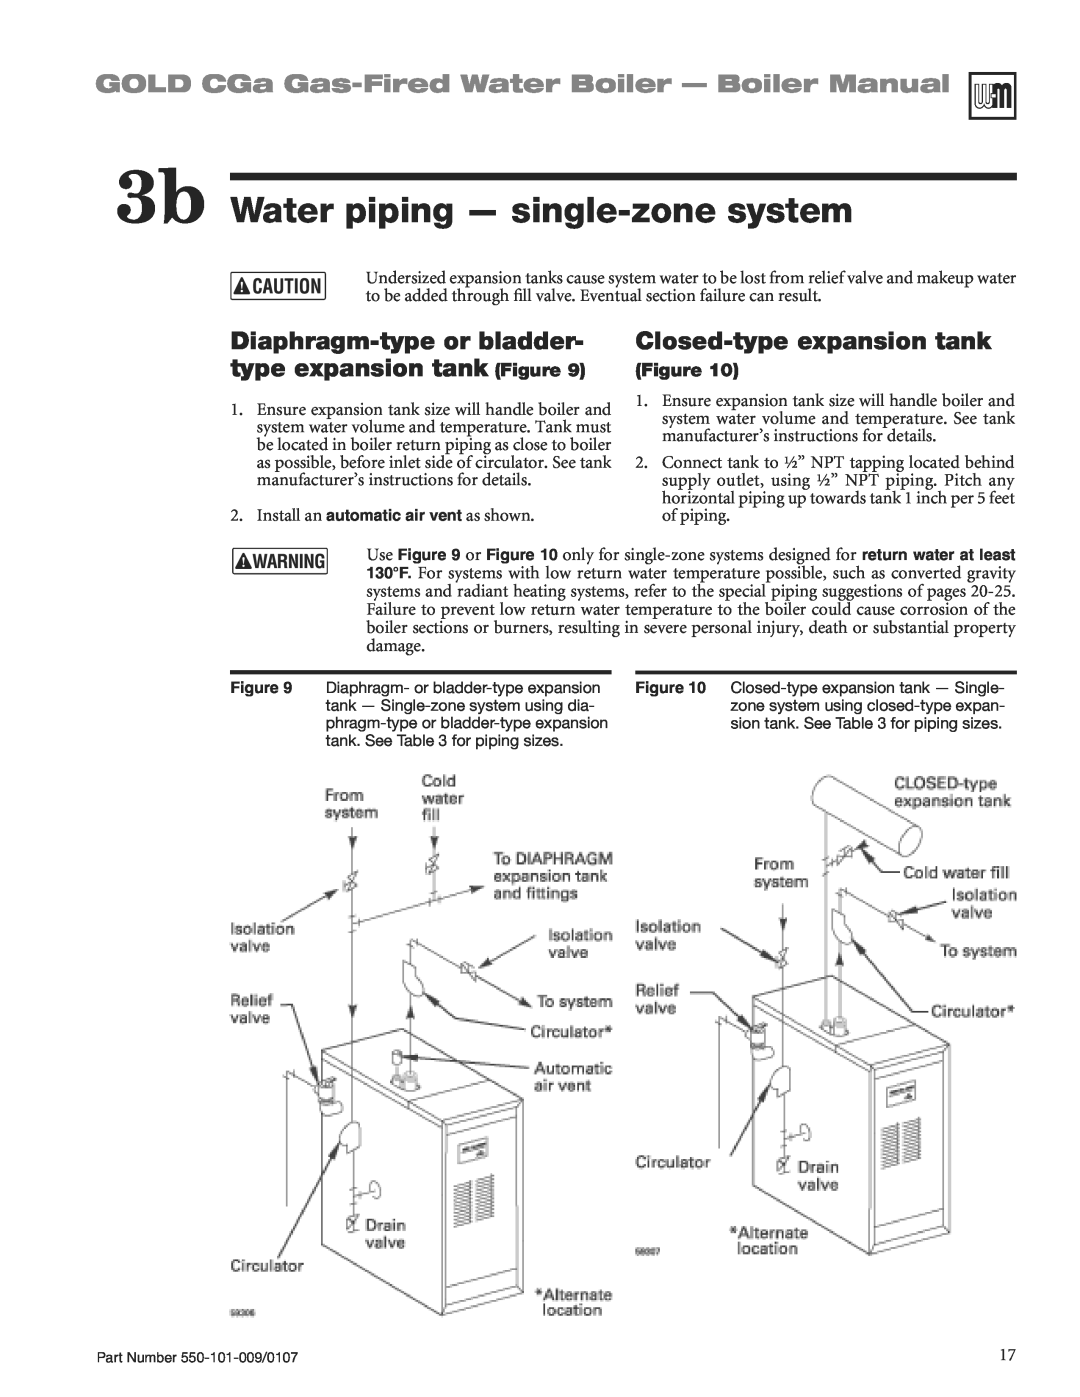 Weil-McLain CGA25SPDN manual 3b Water piping - single-zonesystem, GOLD CGa Gas-FiredWater Boiler - Boiler Manual 